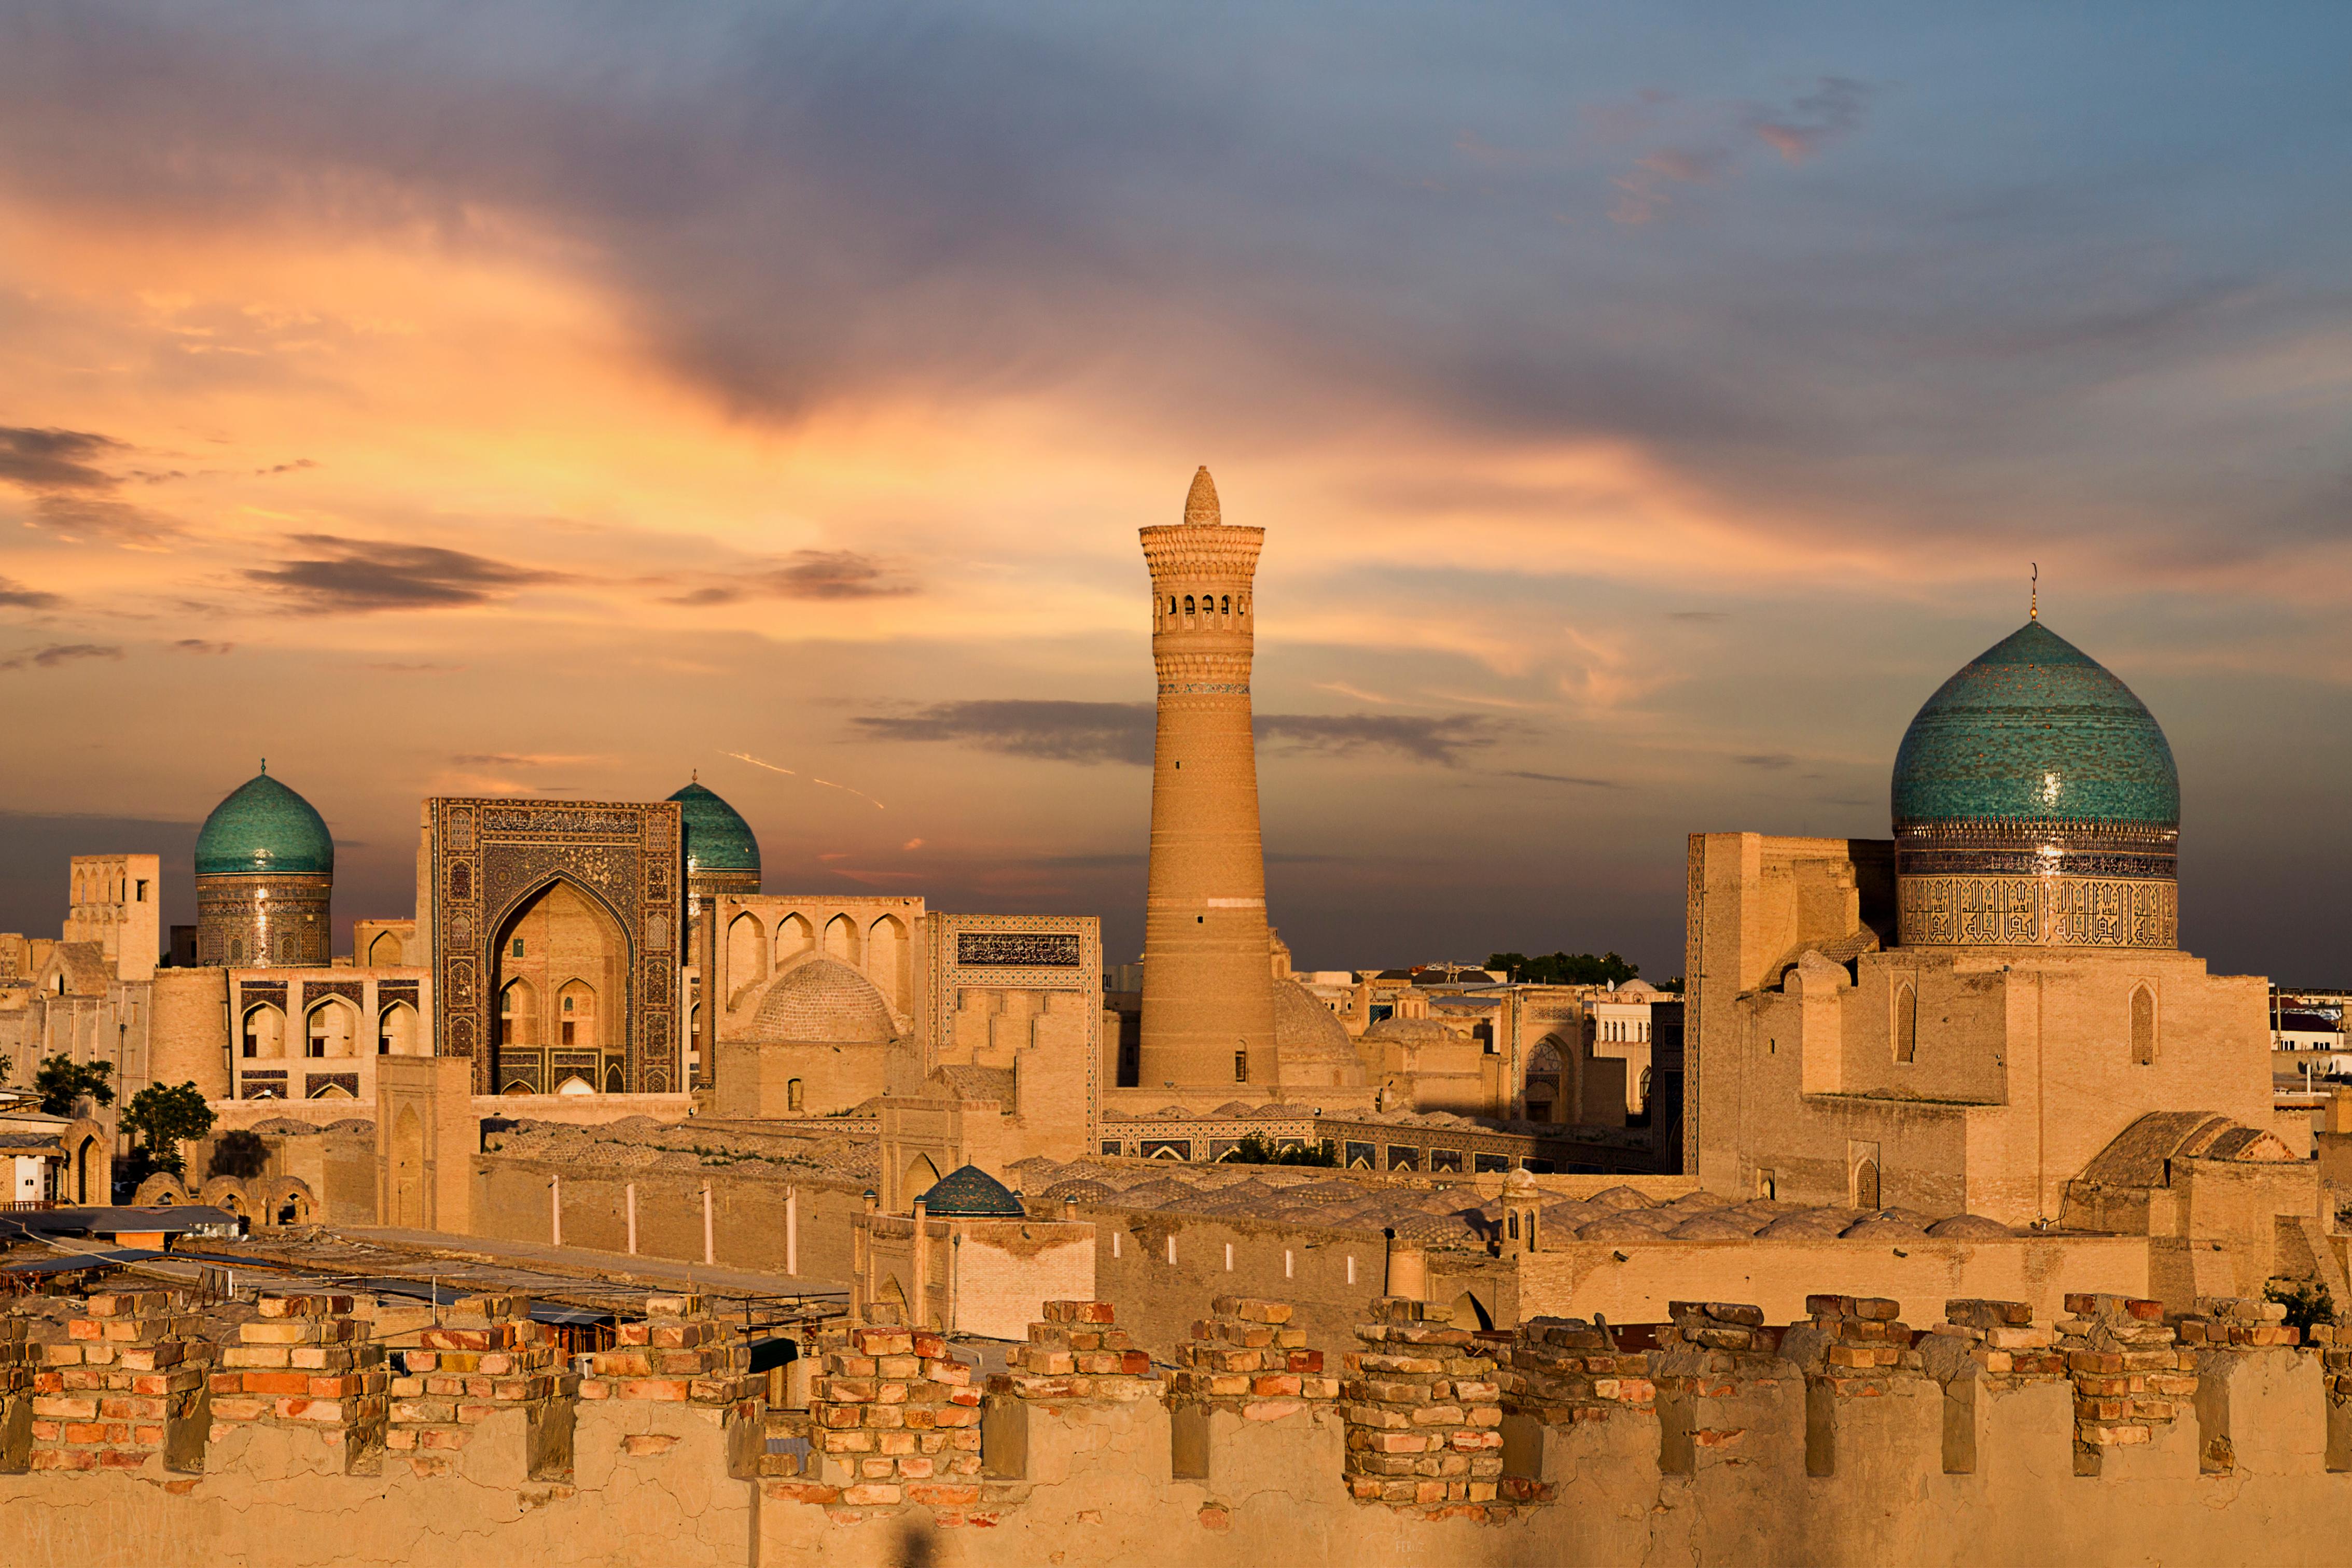 Climb up a vantage point to enjoy a beautiful sunset over Bukhara © Mehmet0 / Shutterstock